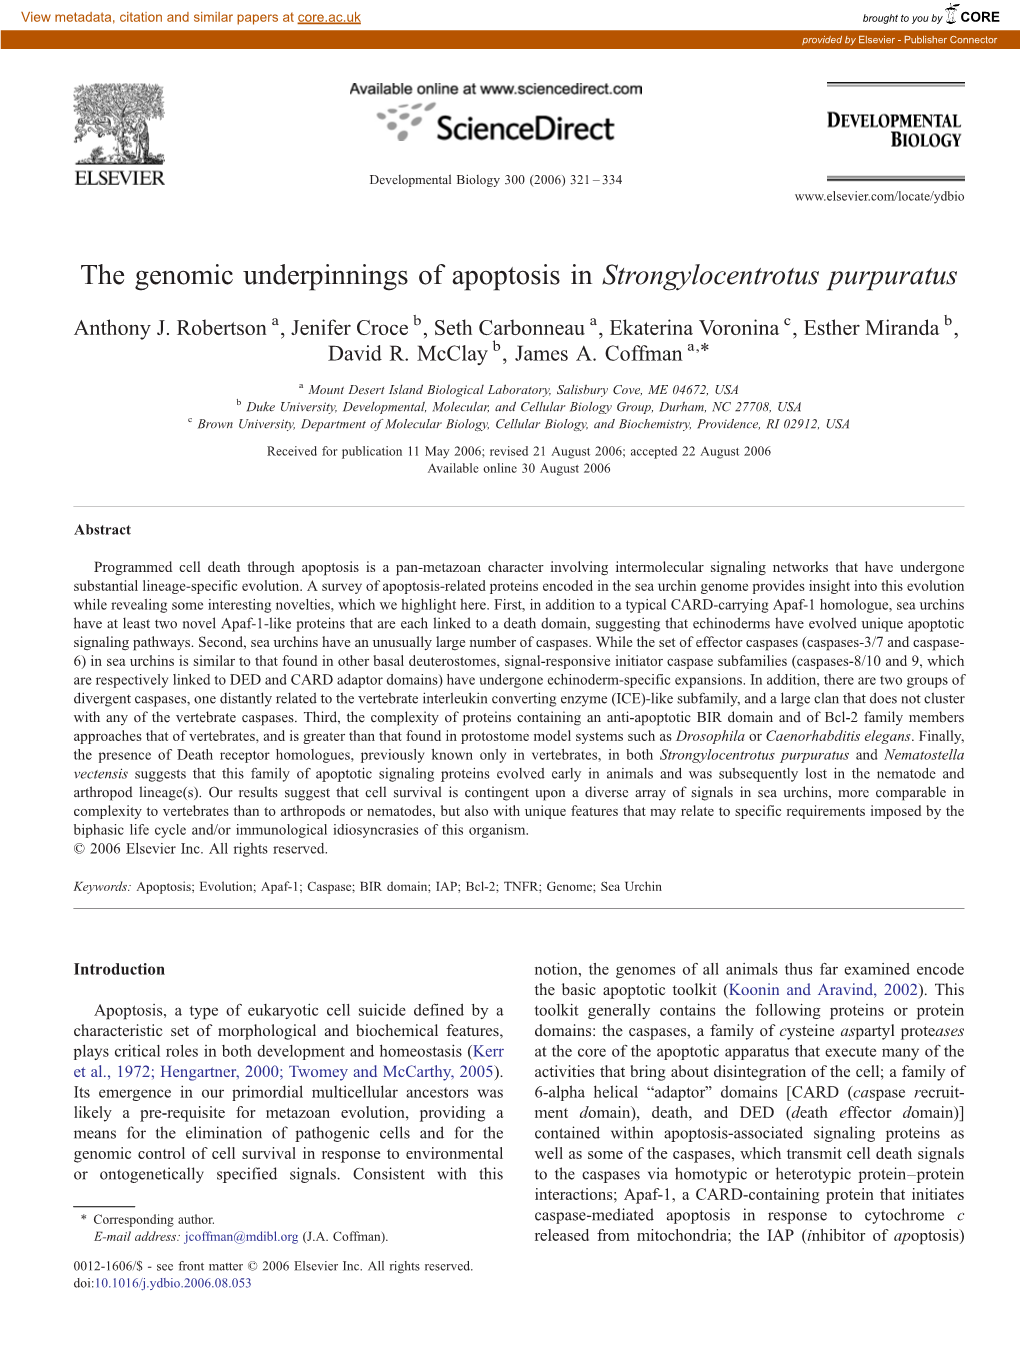 The Genomic Underpinnings of Apoptosis in Strongylocentrotus Purpuratus